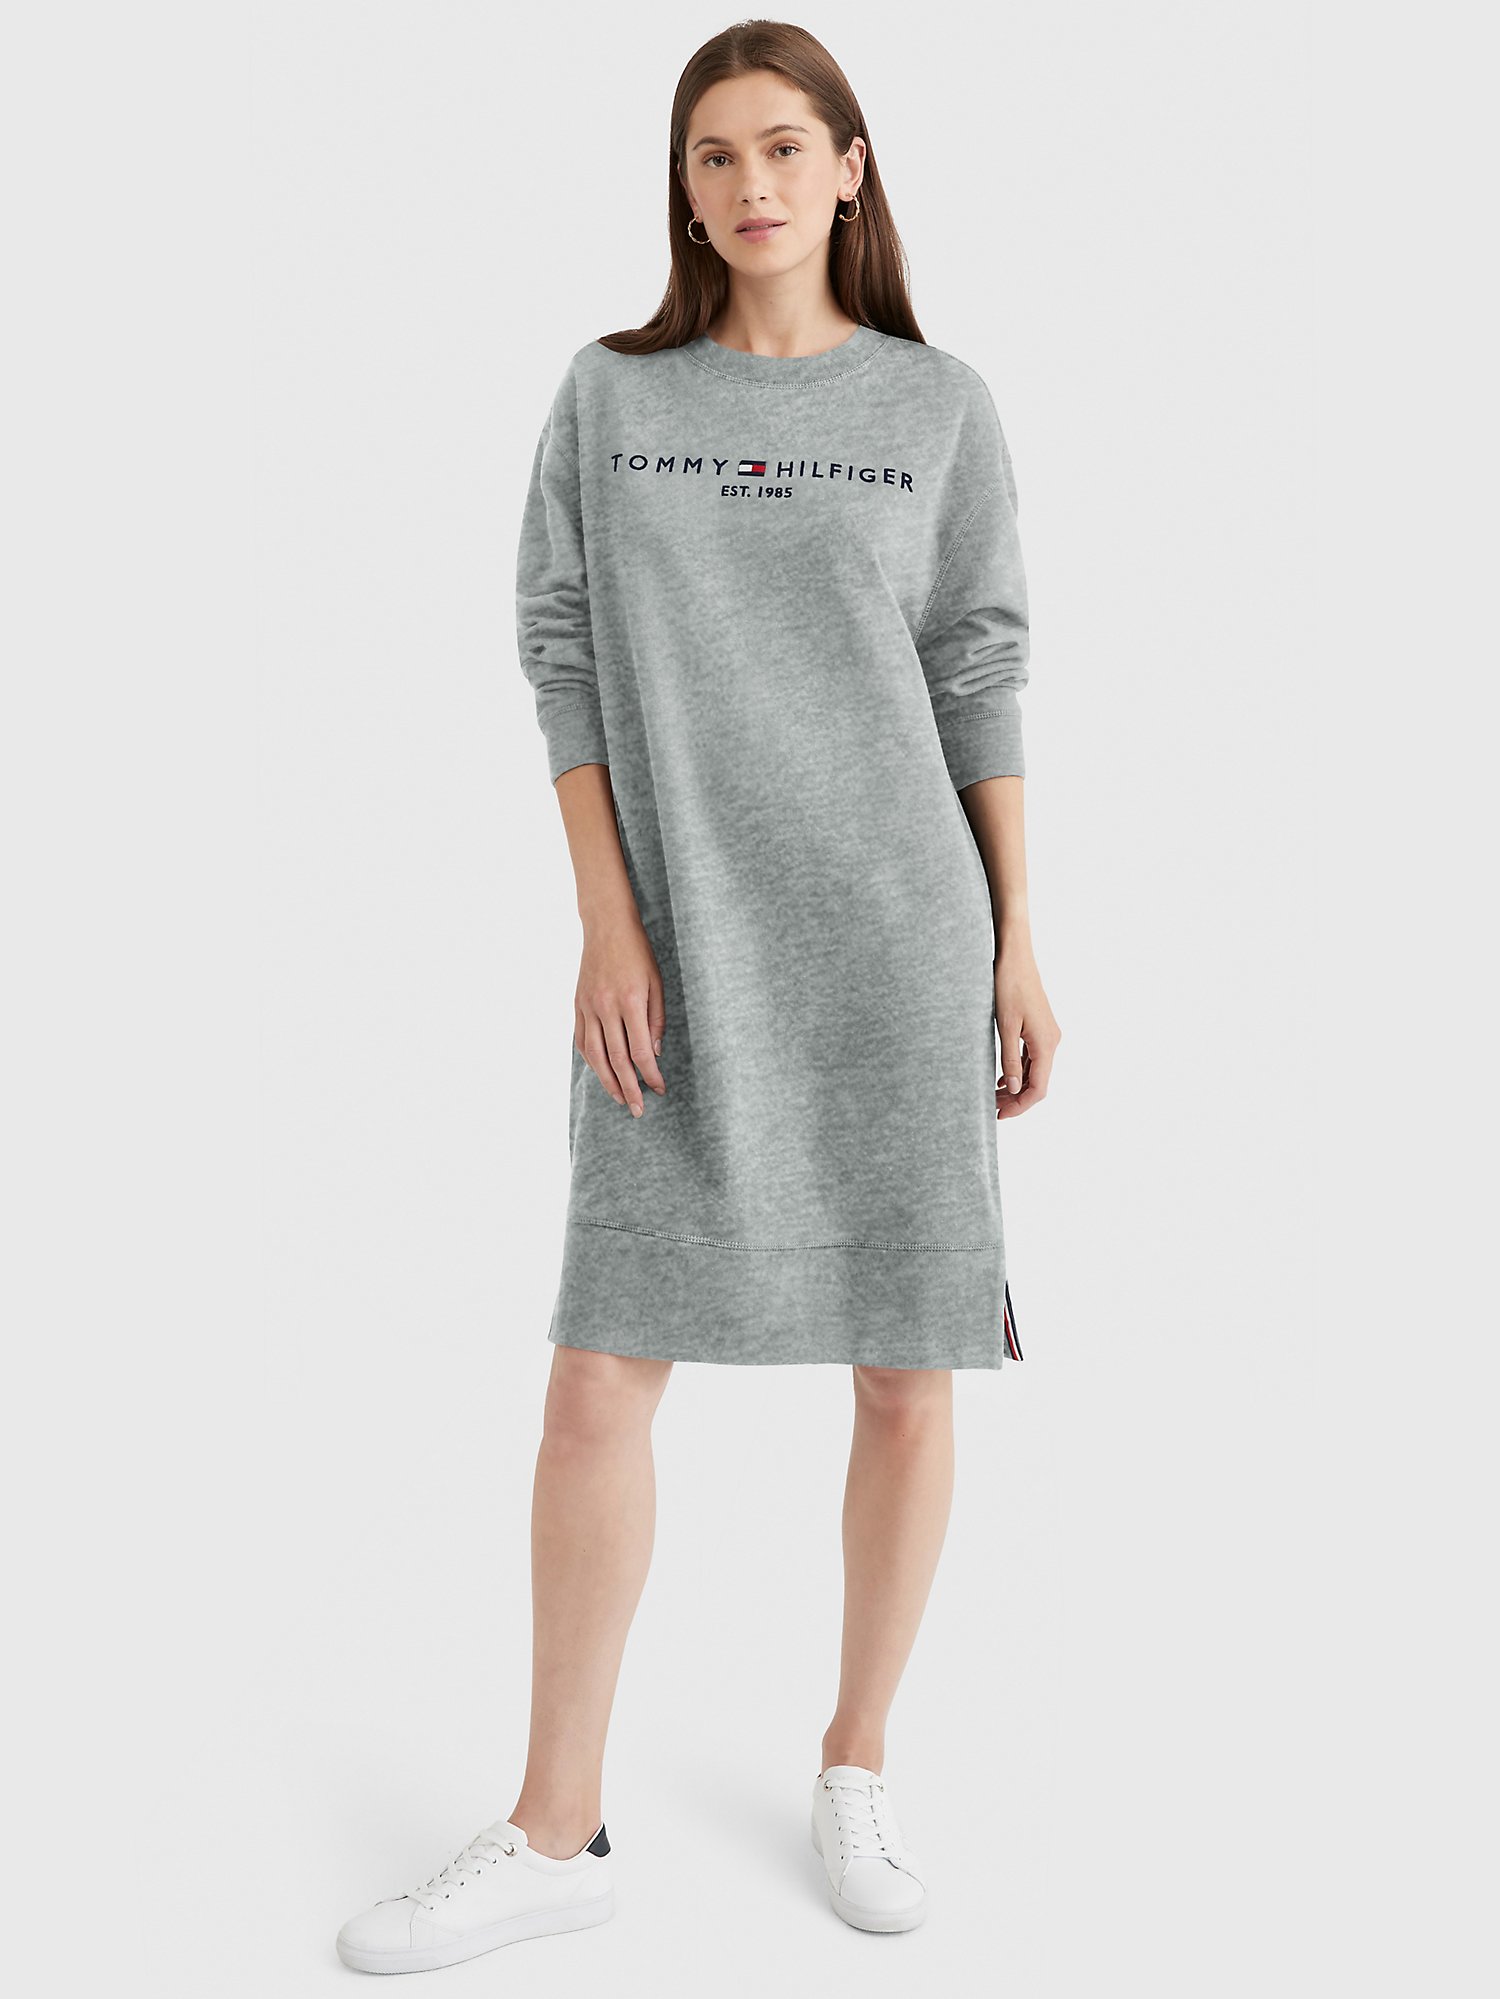 Hamburger voordeel Seminarie Hilfiger Logo Sweatshirt Dress | Tommy Hilfiger USA